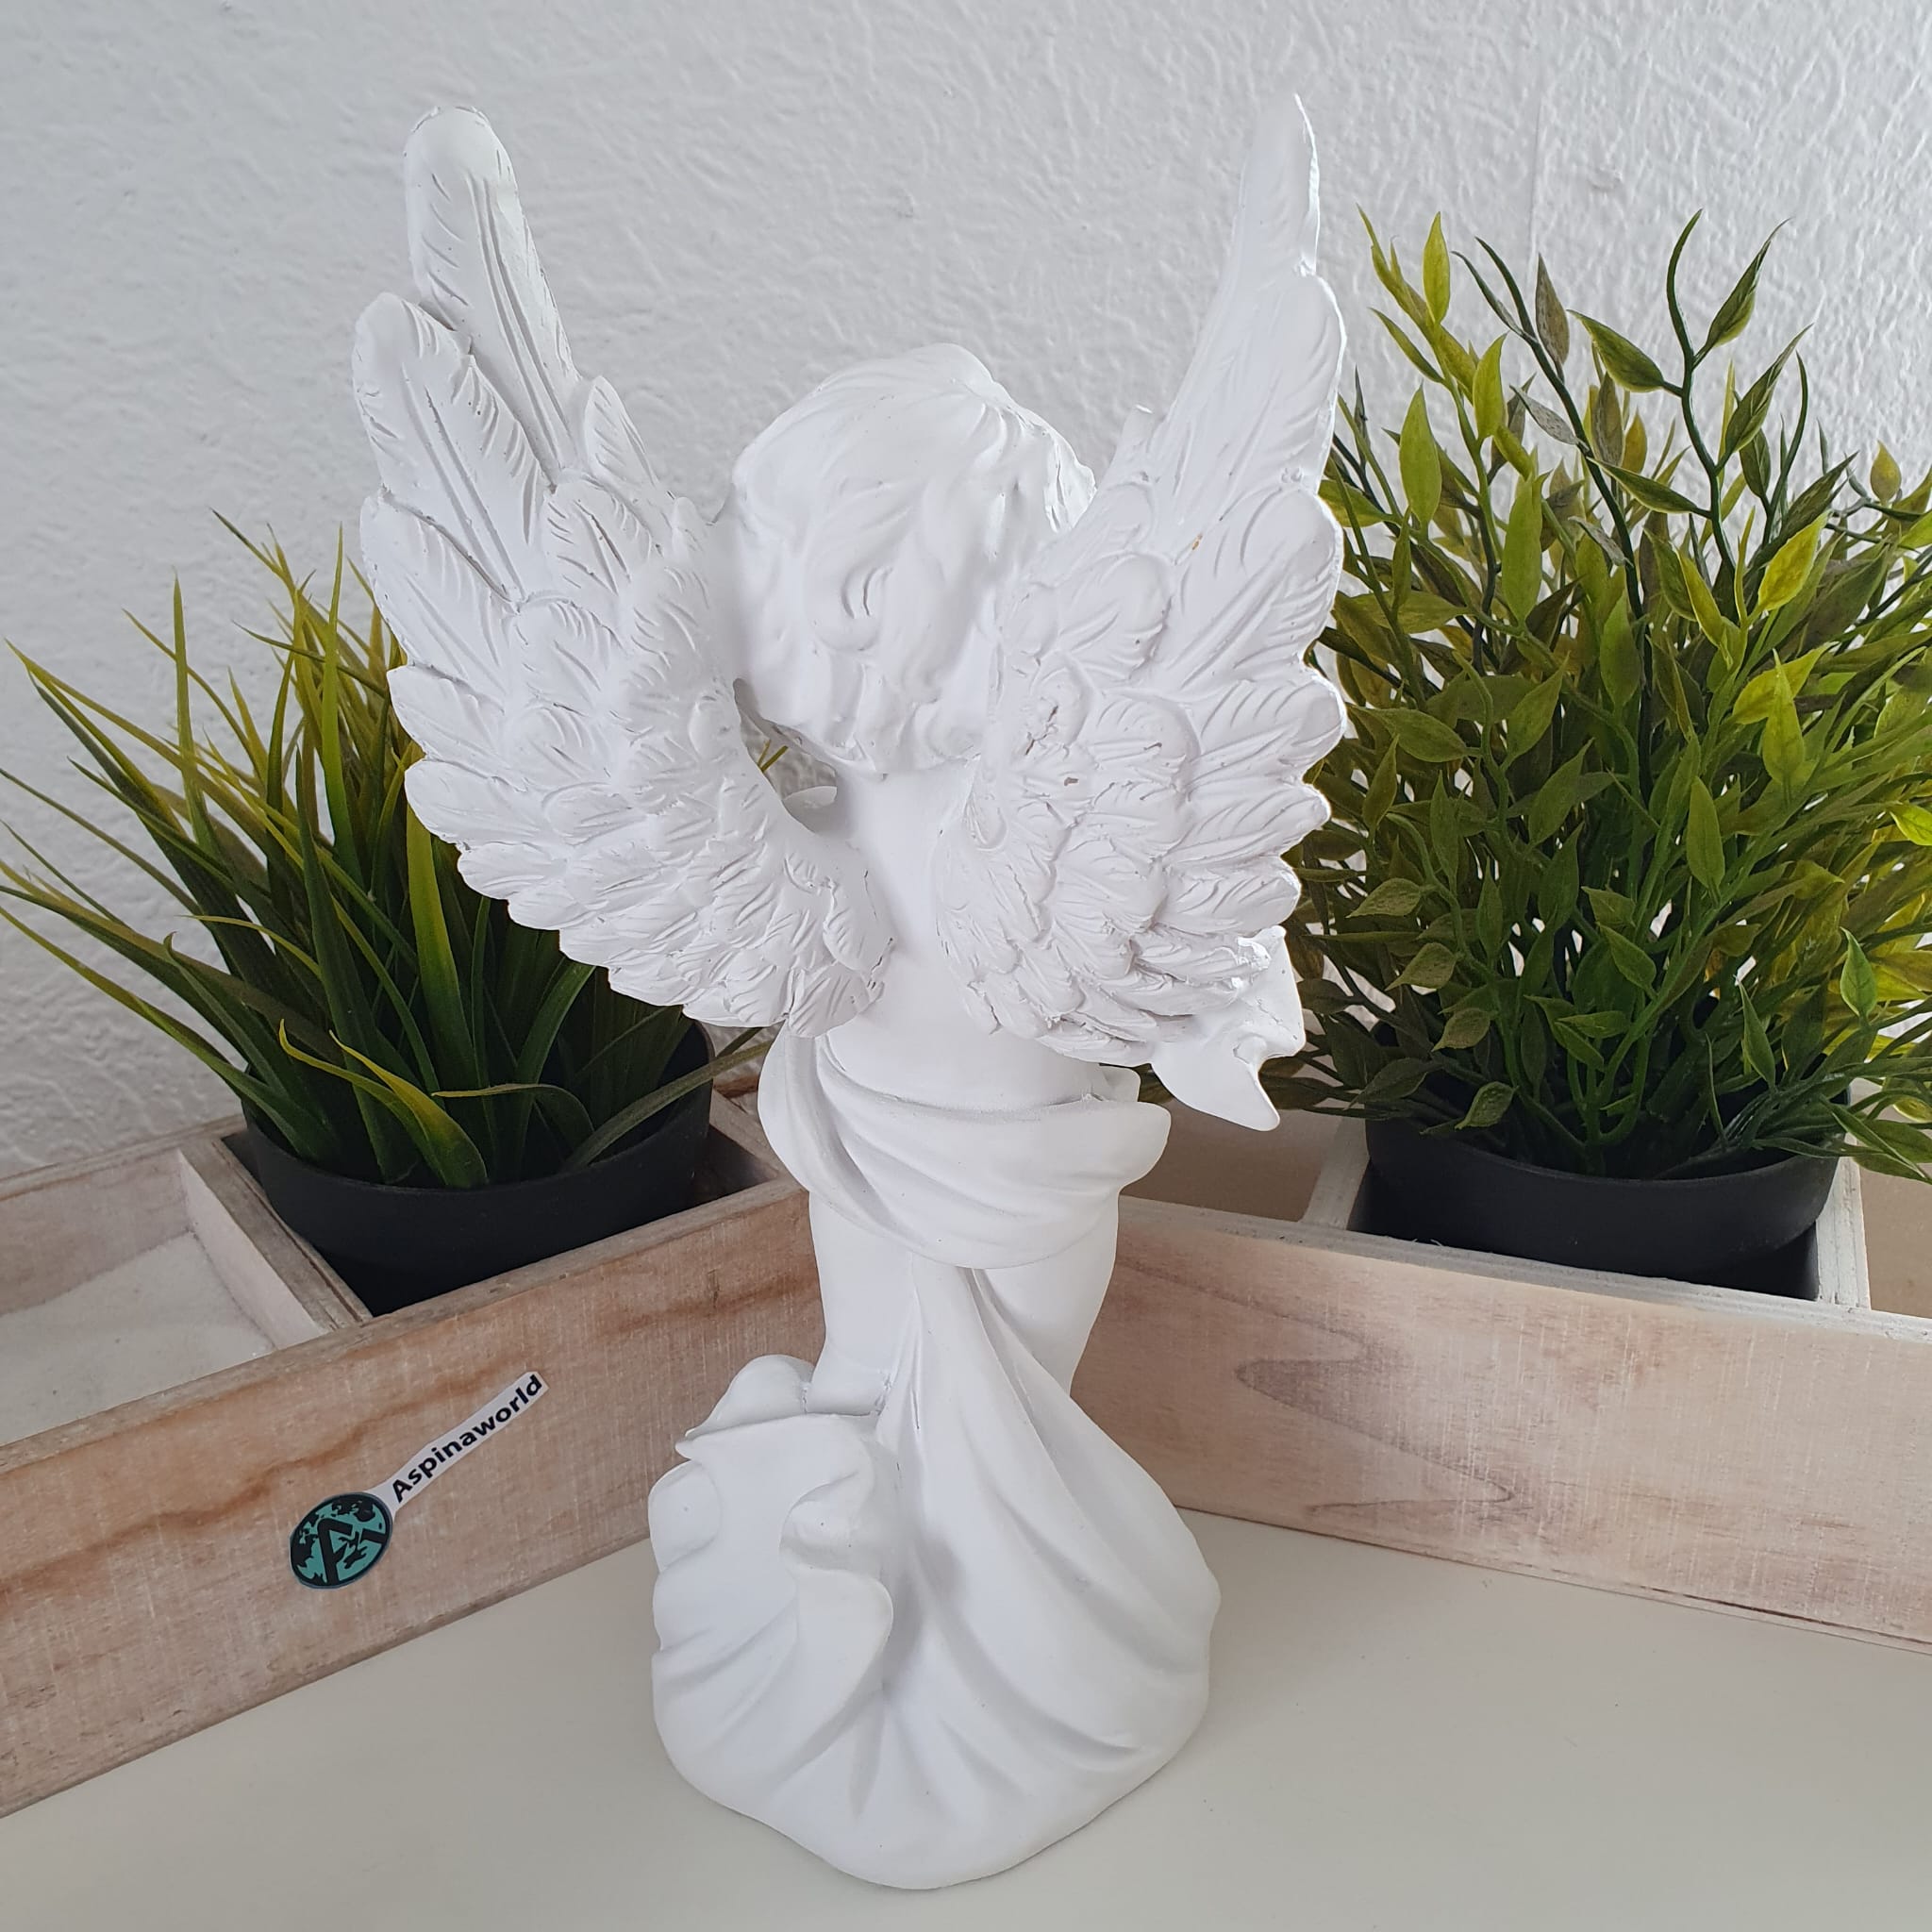 Grabengel Betende Engel Figur 29 cm mit Kreuz